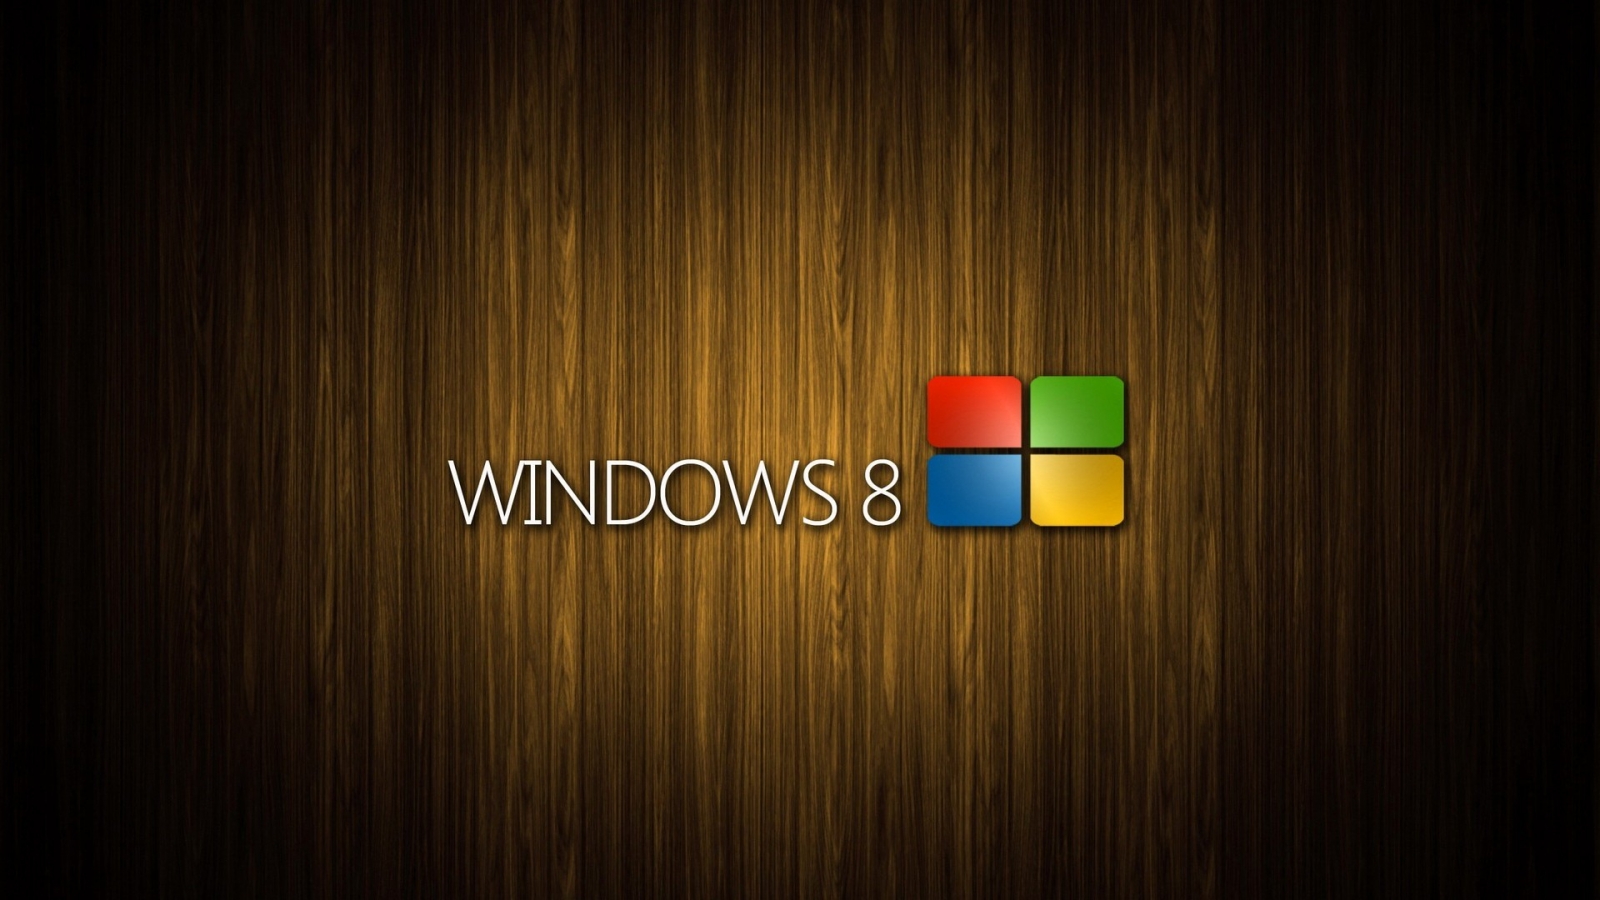 Microsoft Windows 8 Logo for 1600 x 900 HDTV resolution